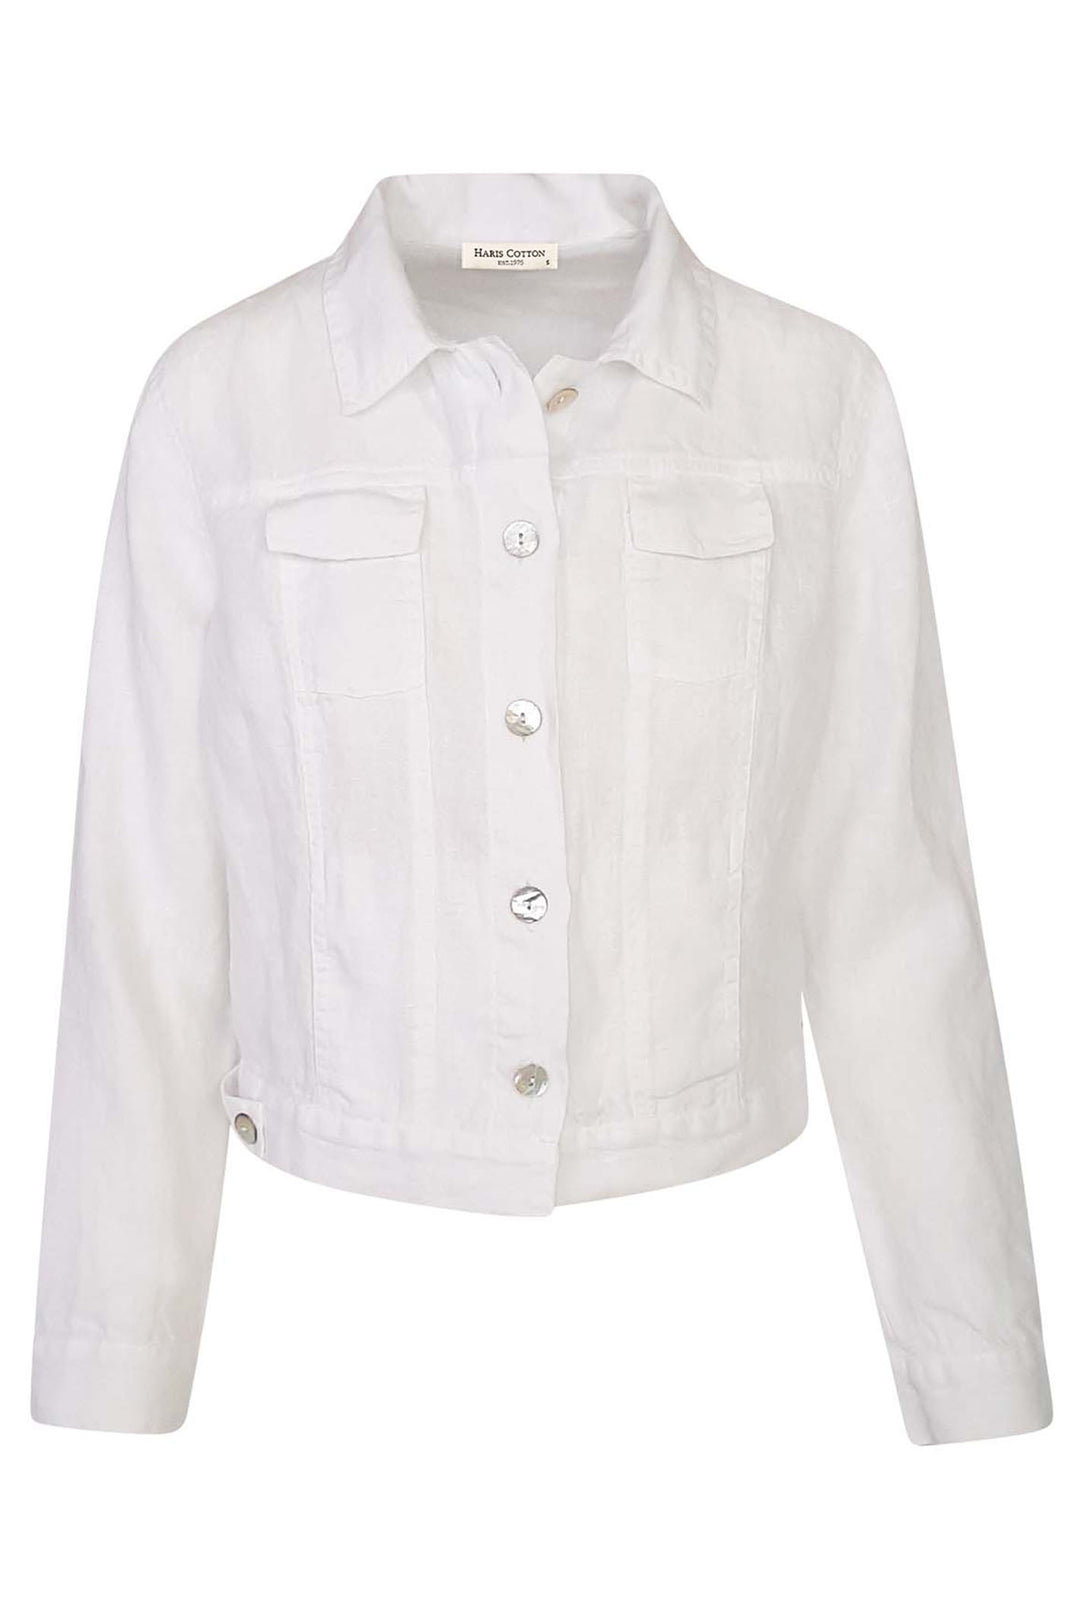 Haris Cotton 2165 White Linen Jacket - Shirley Allum Boutique